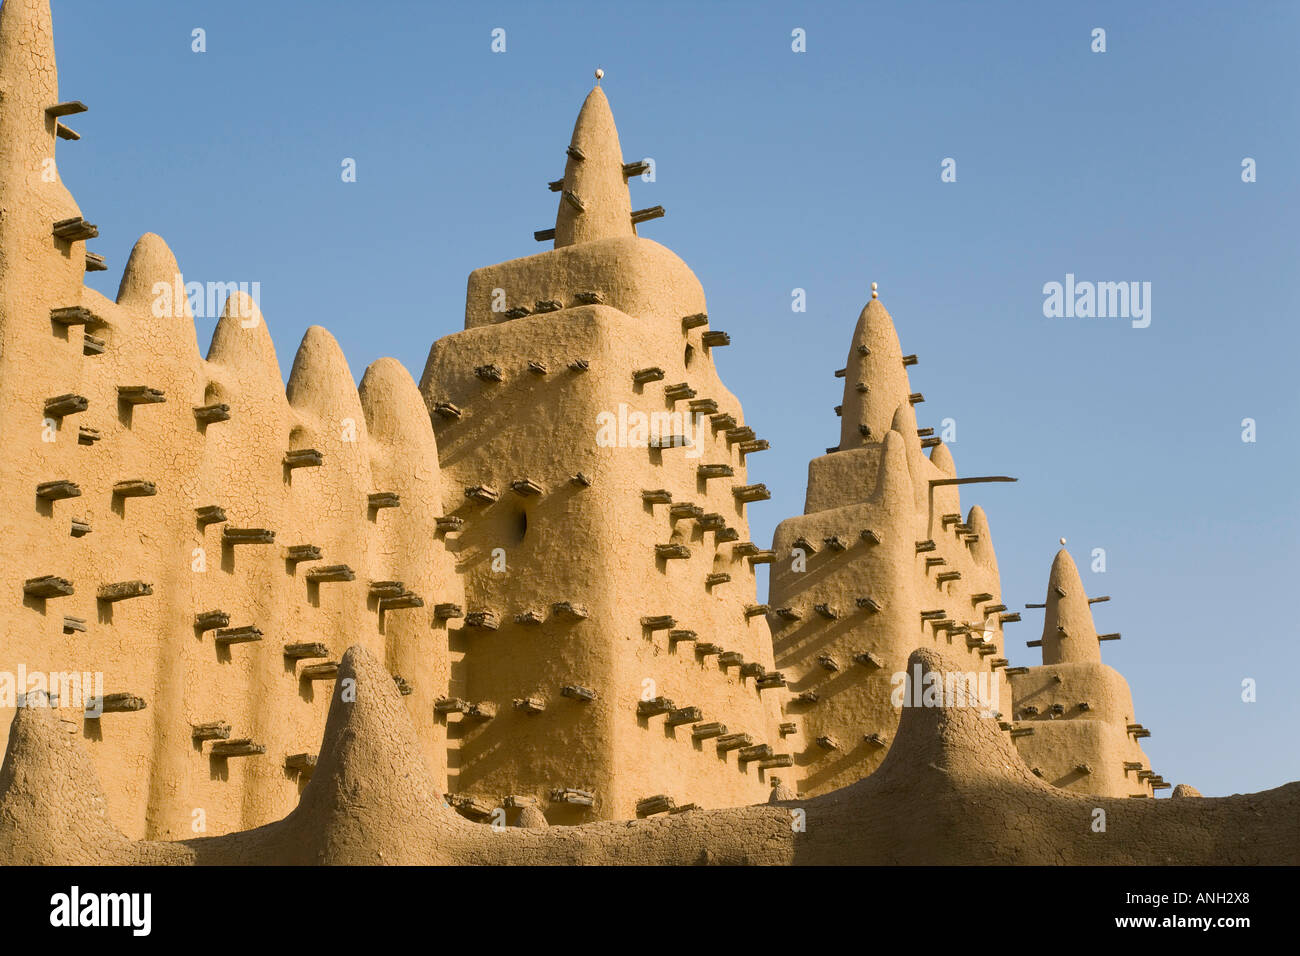 Djenne Moschee, Djenné, Nigerdelta im Landesinneren Mopti Region, Mali Stockfoto